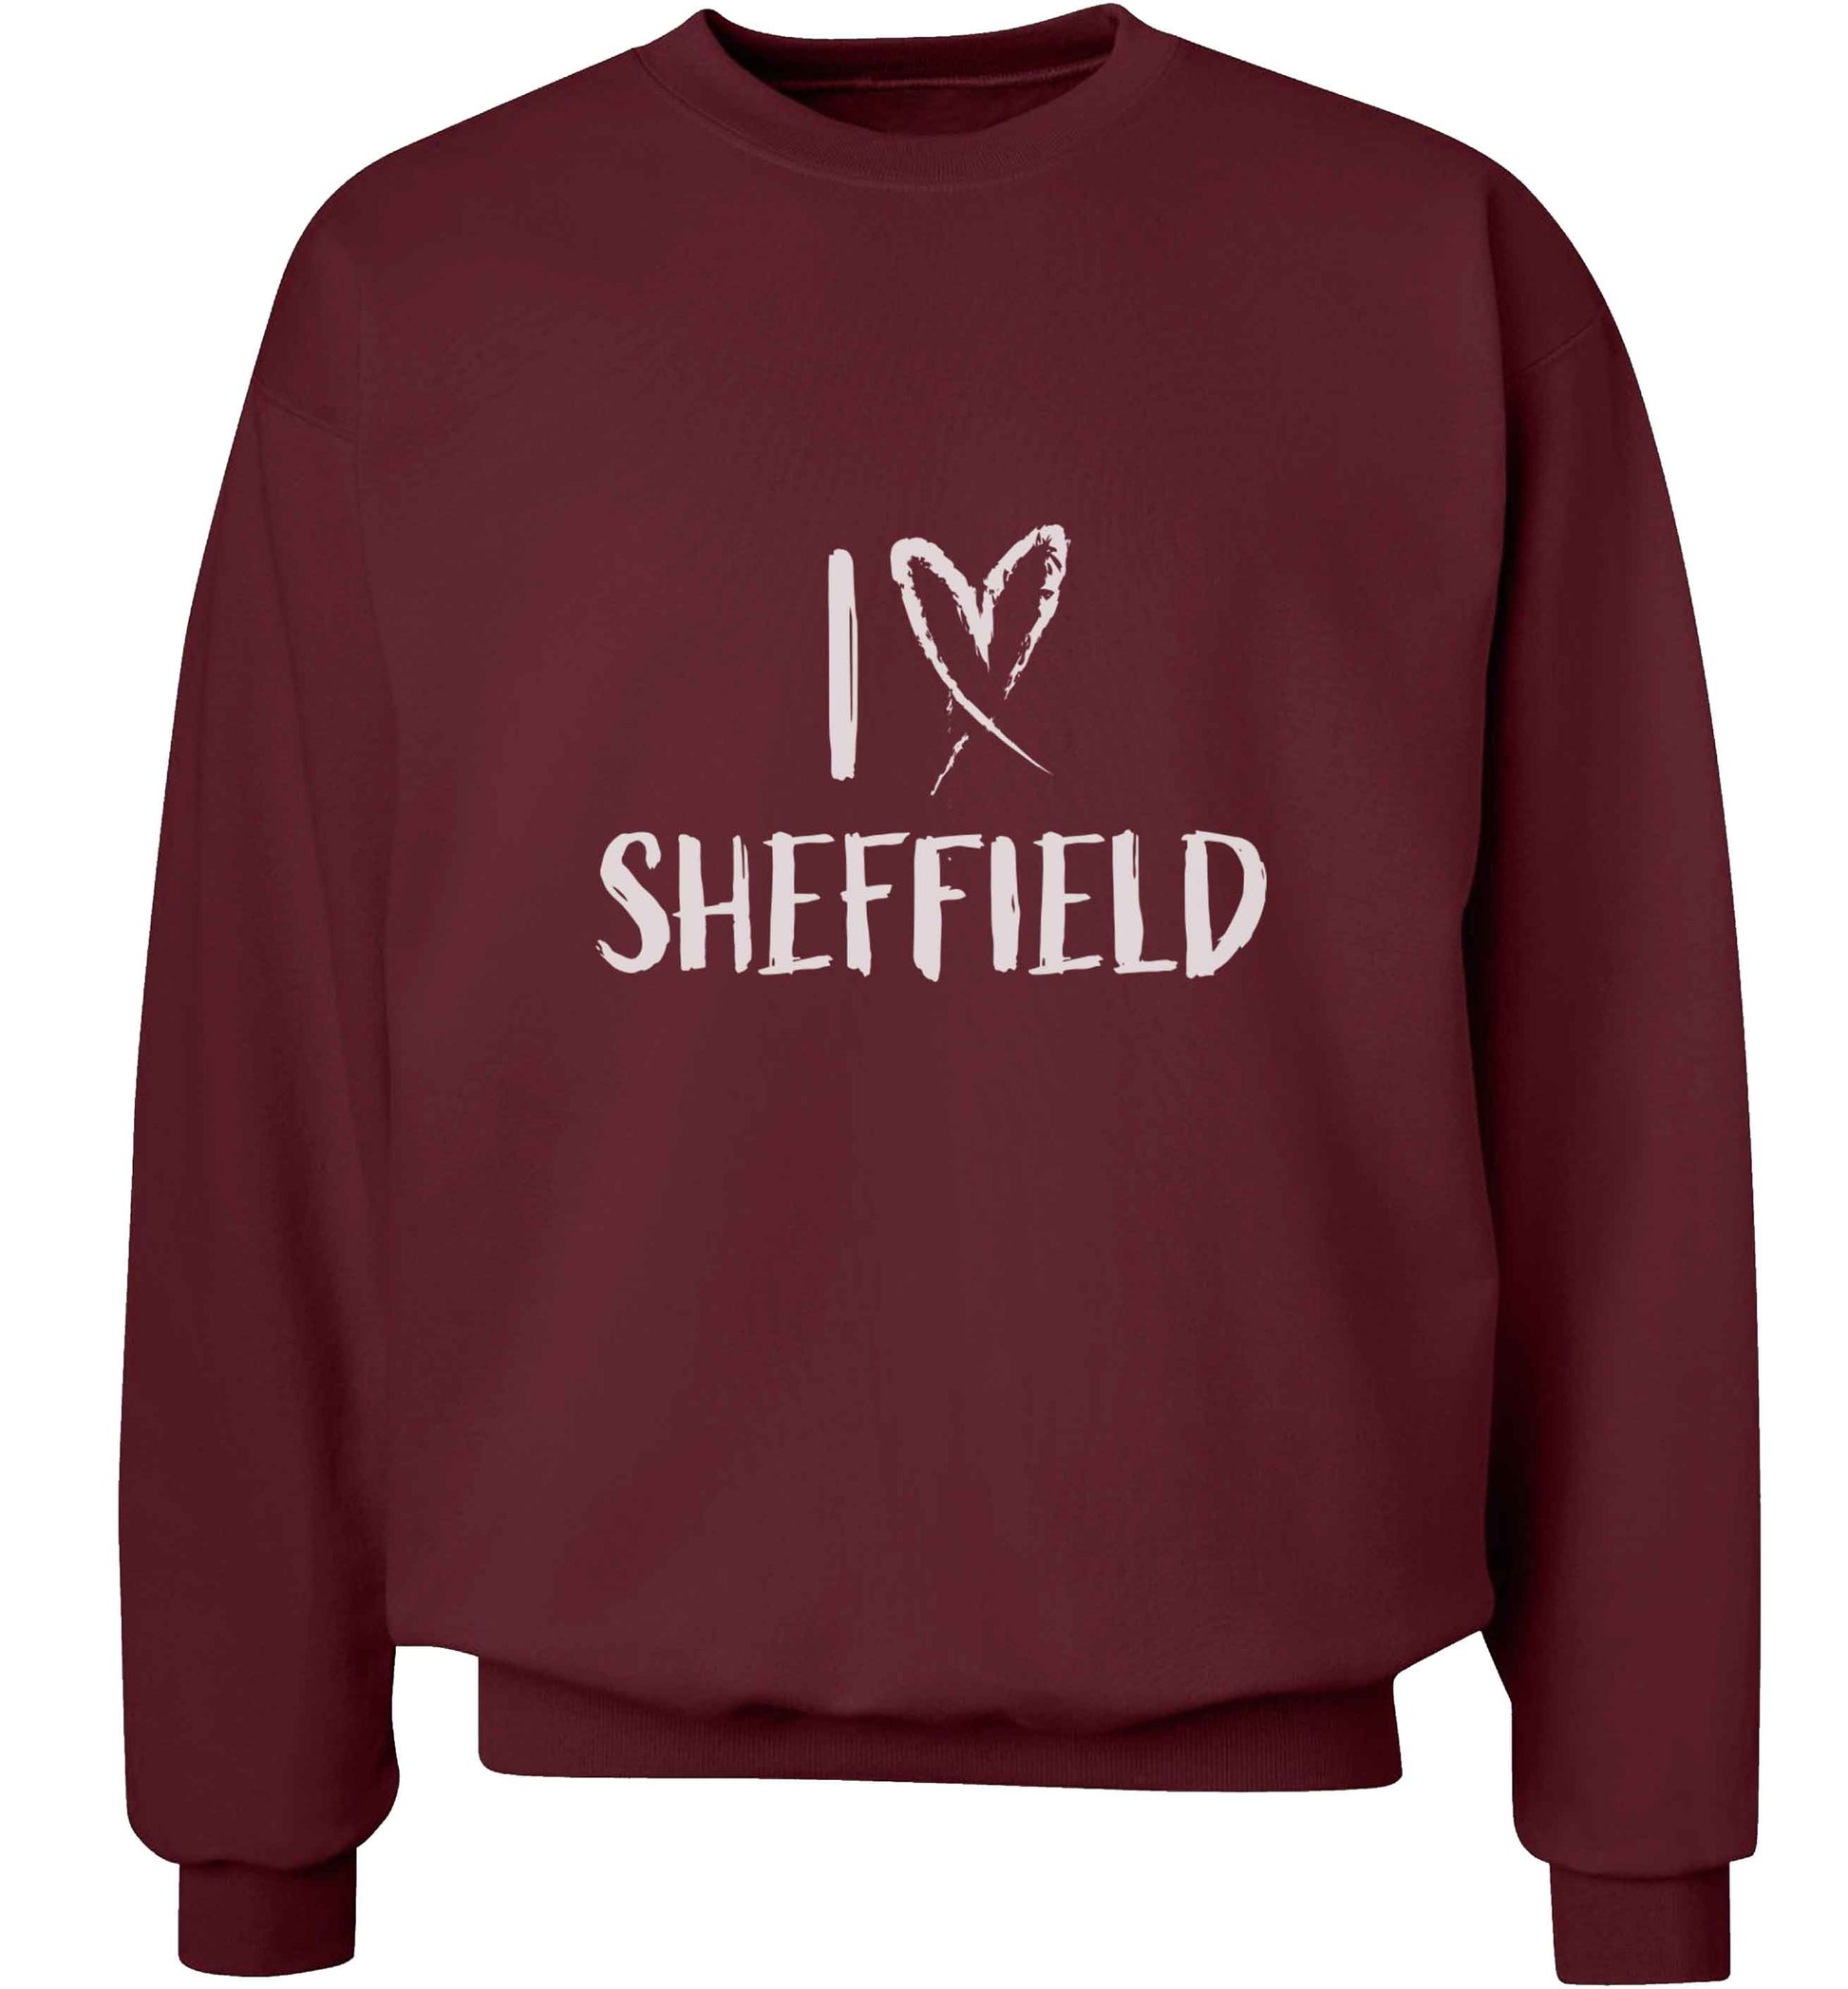 I love Sheffield adult's unisex maroon sweater 2XL